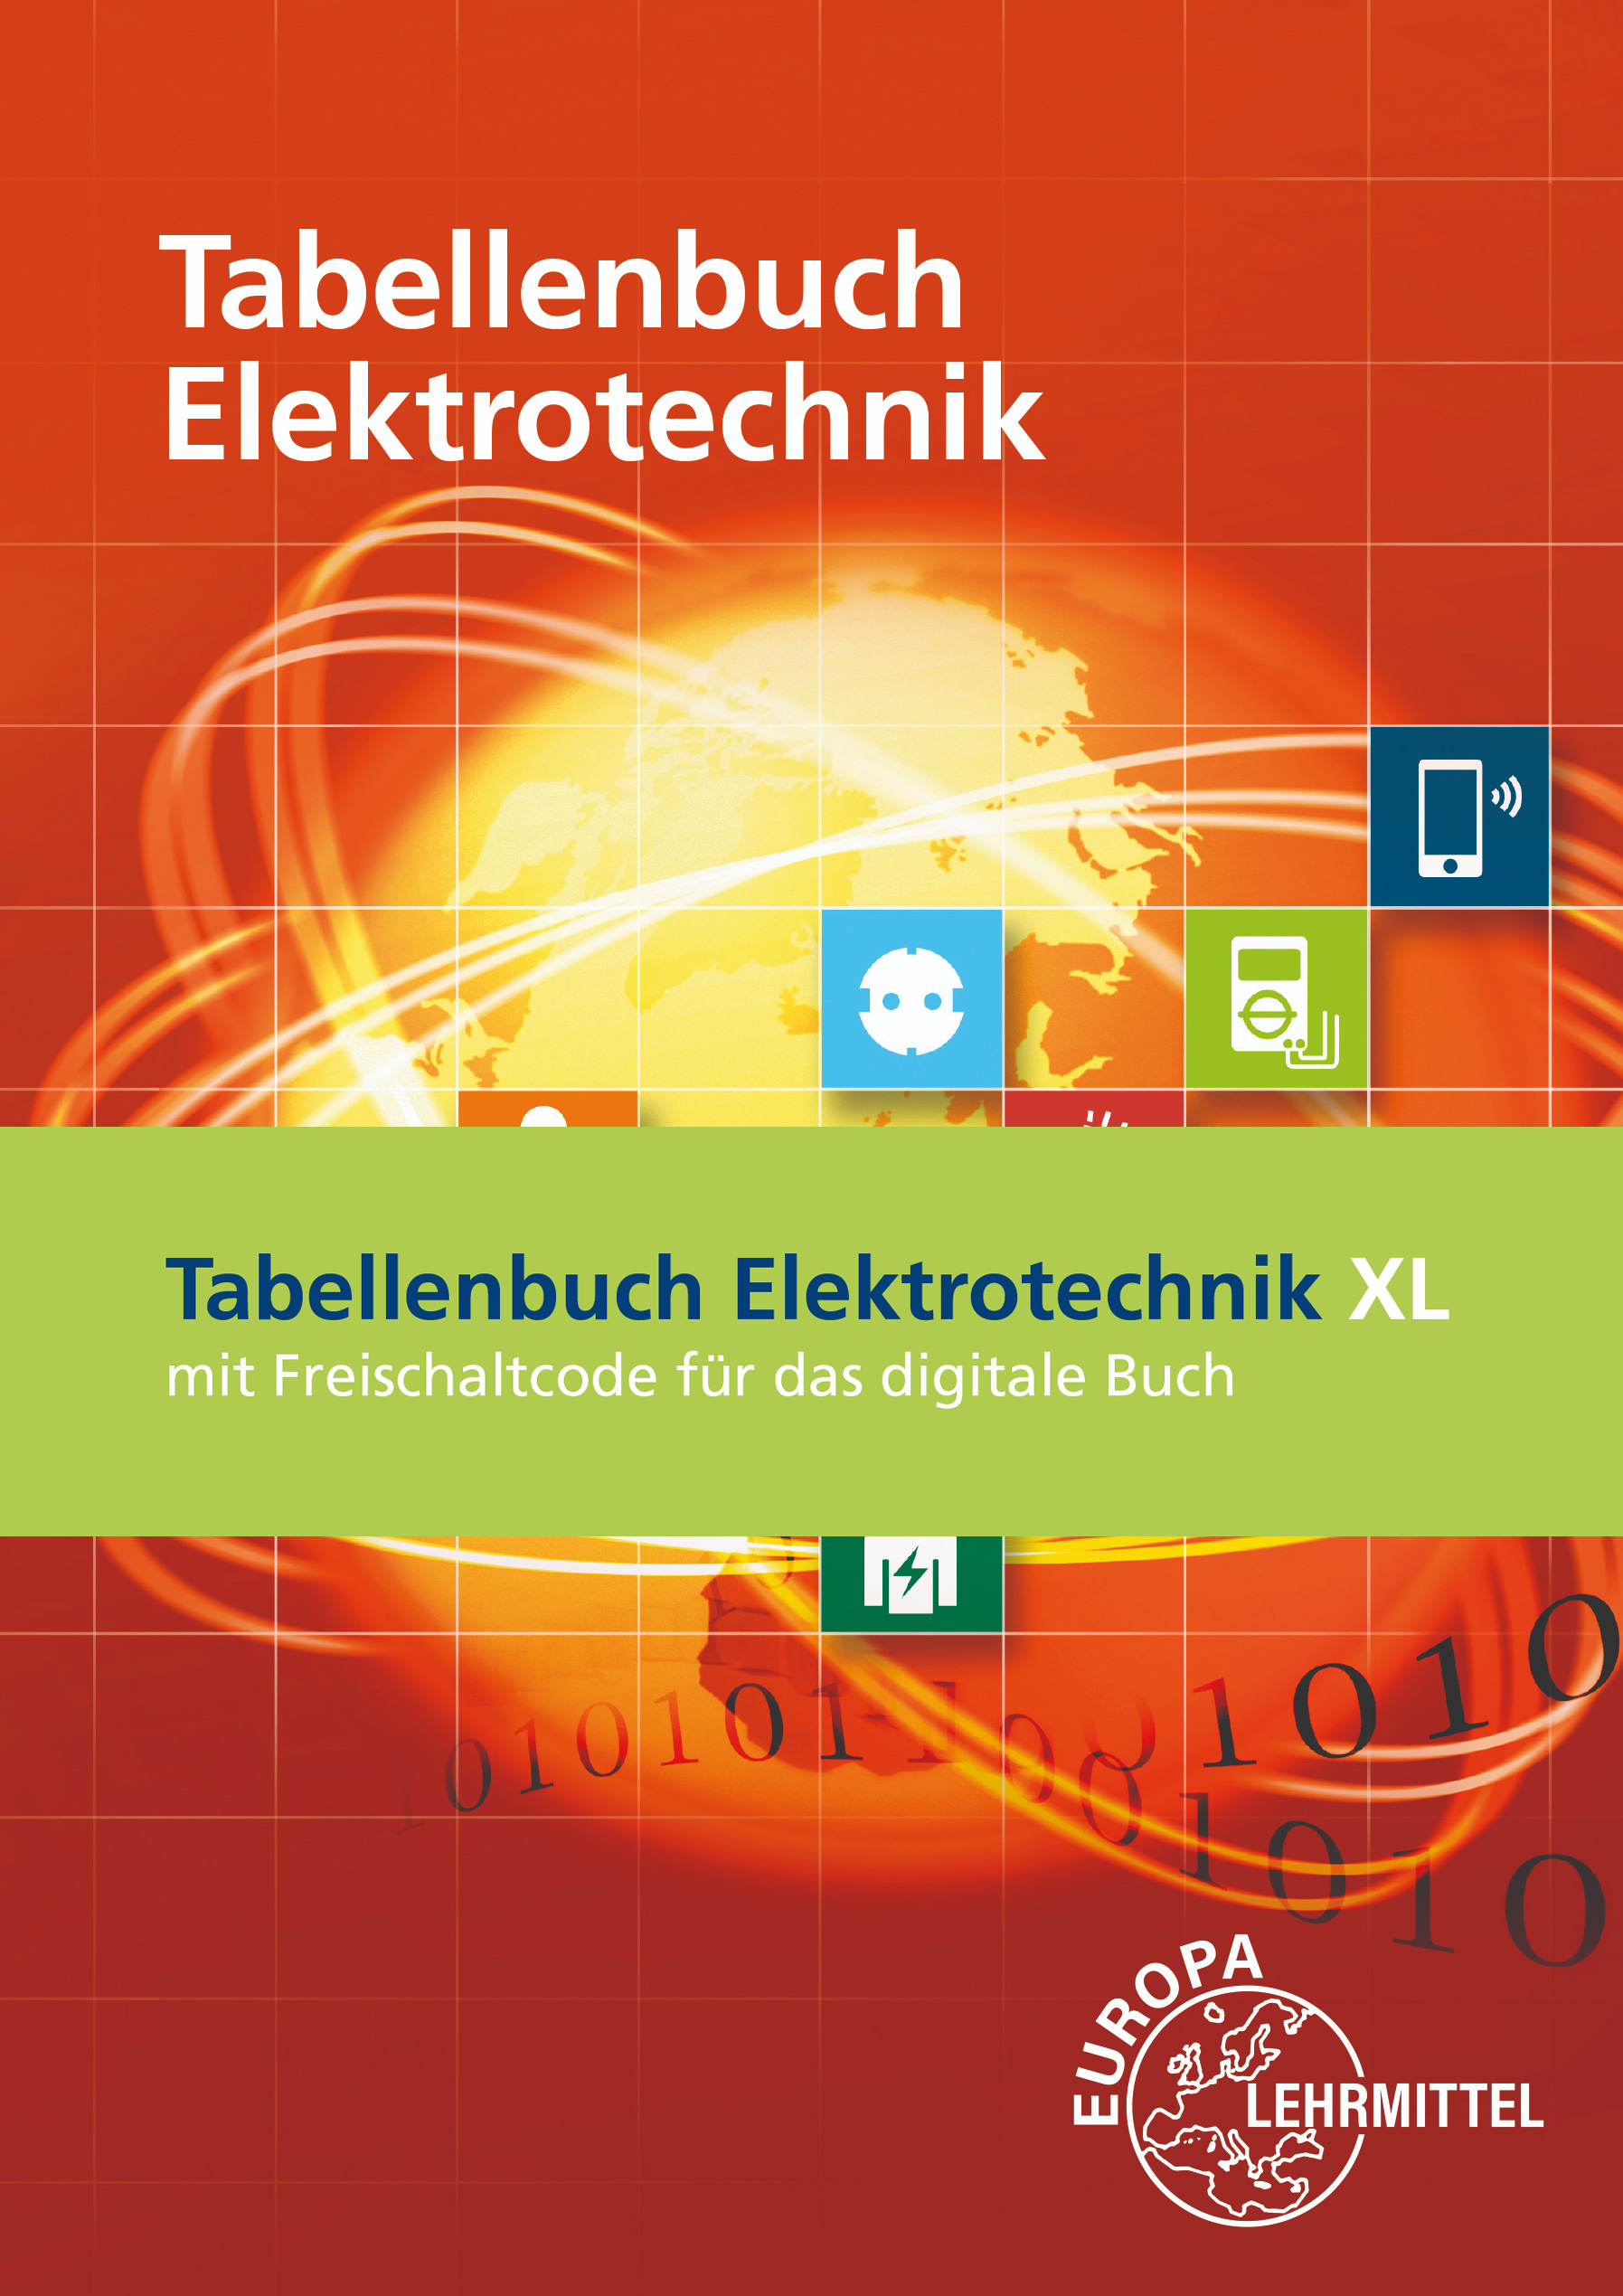 Tabellenbuch Elektrotechnik Europa Lehrmittel 1969 